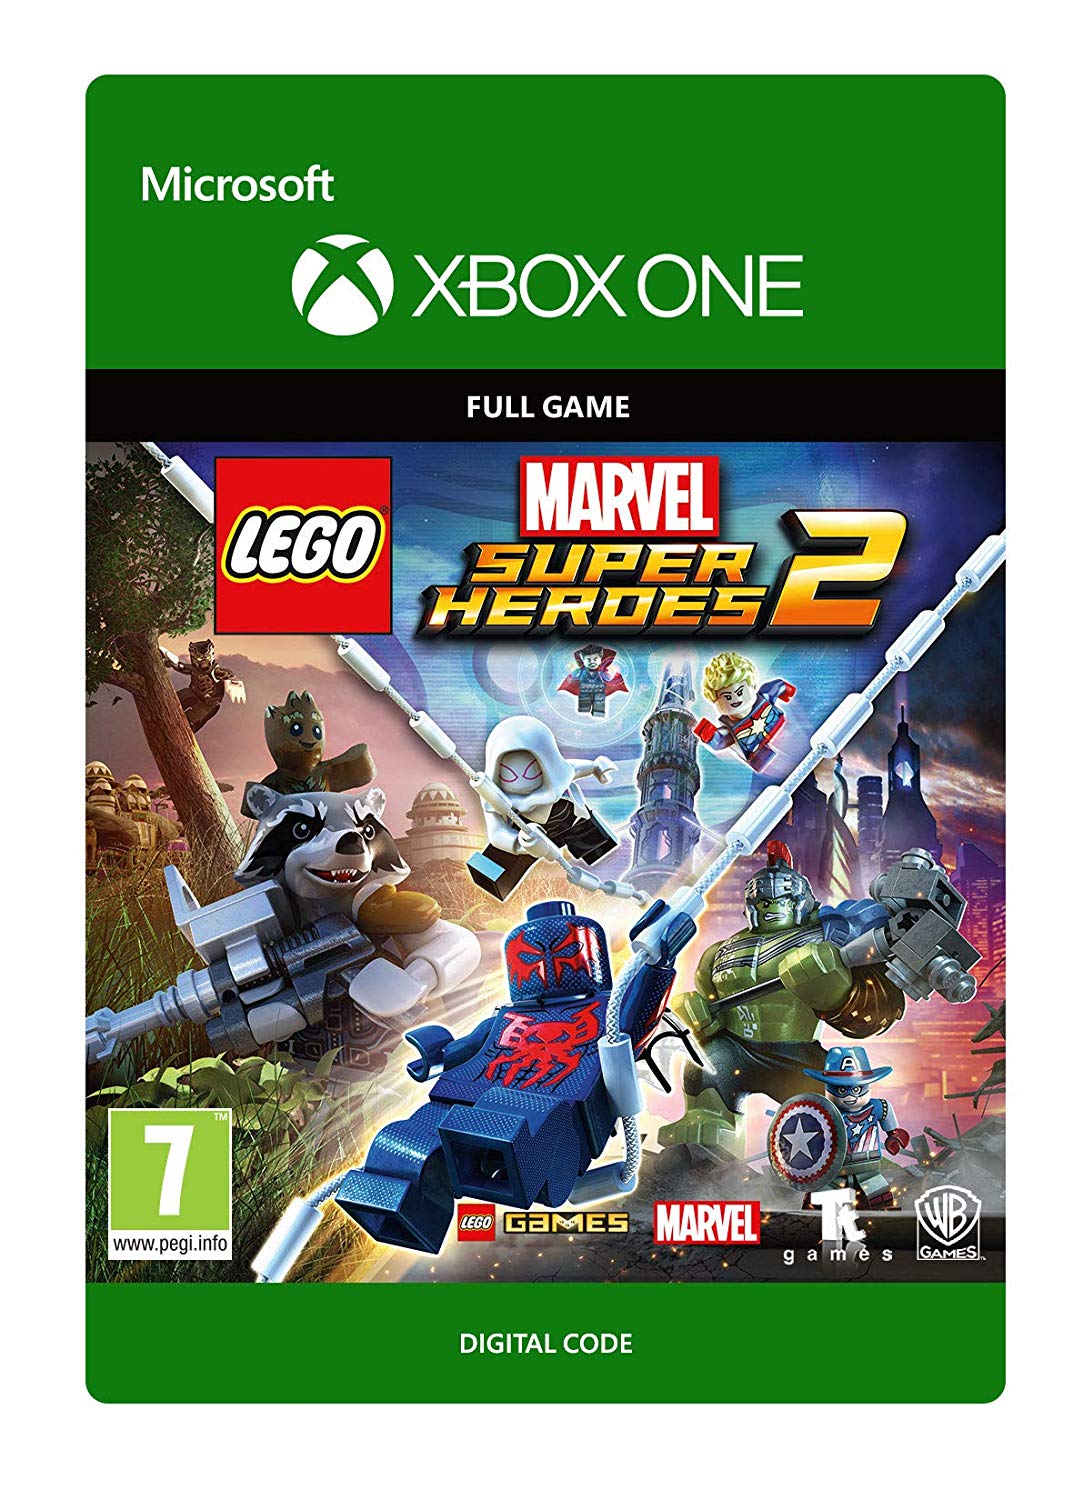 LEGO Marvel Super Heroes 2 Digital Download Key (Xbox One): GLOBAL (works worldwide)